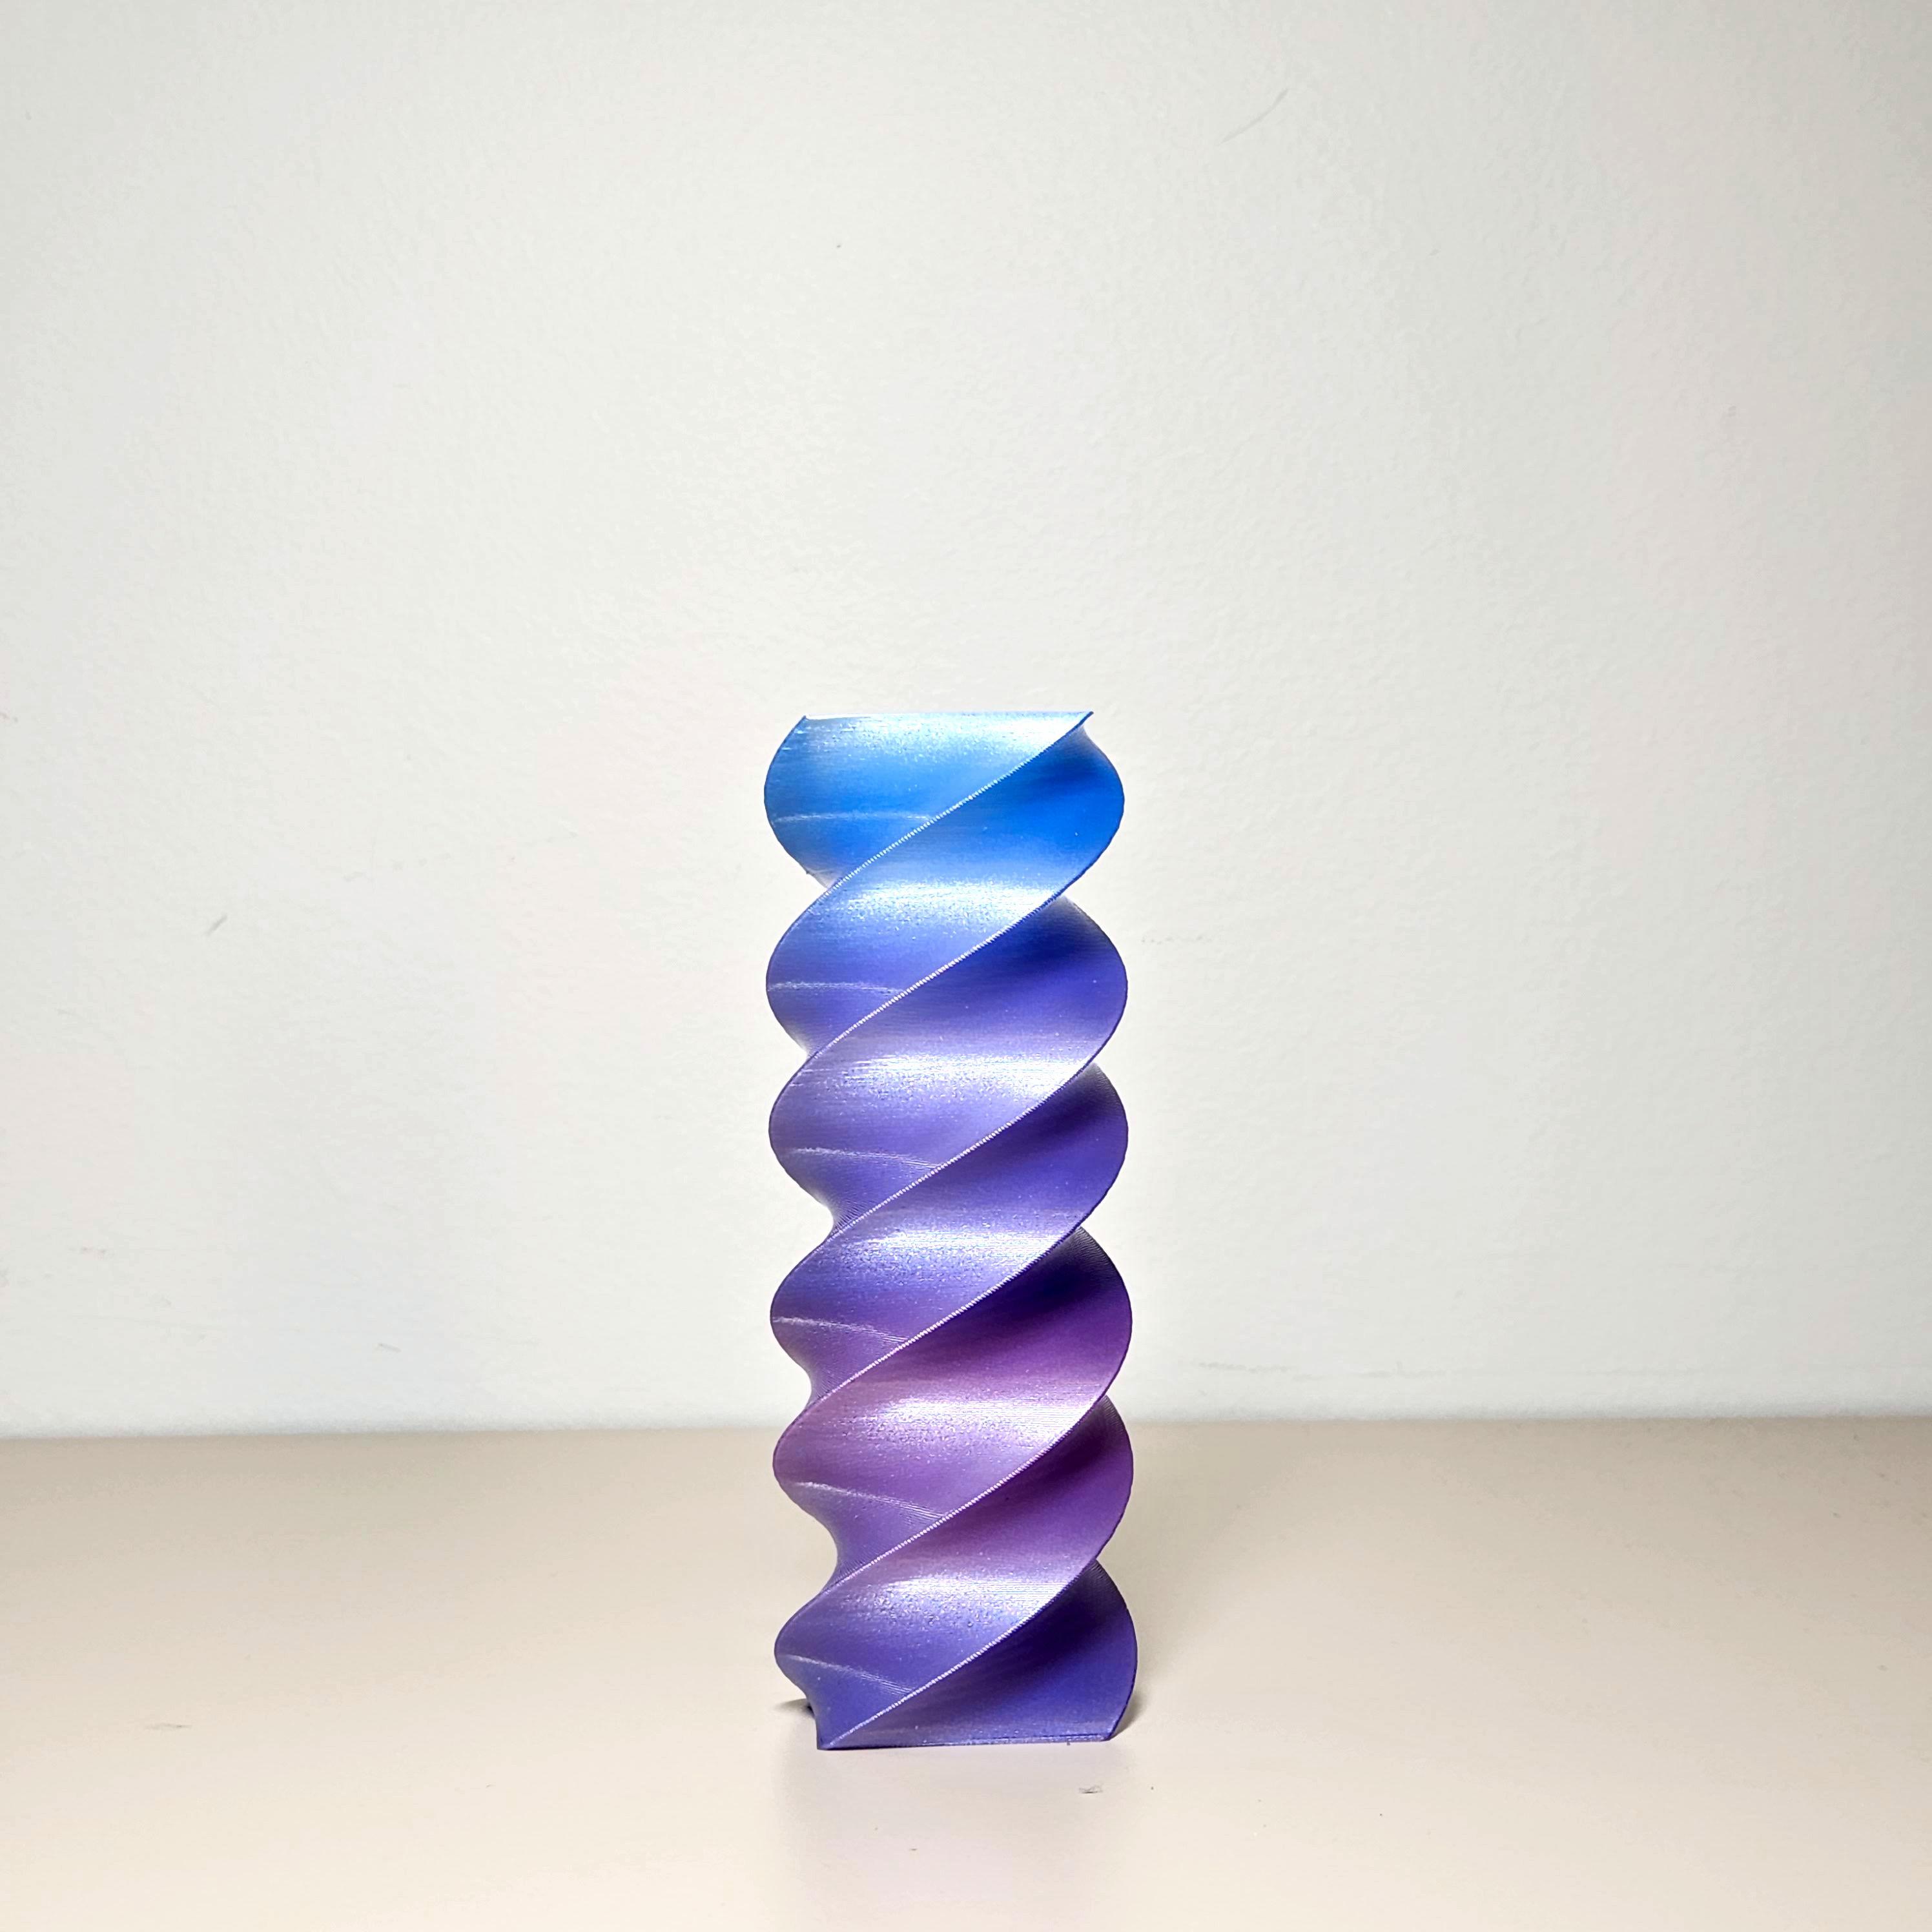 Twisted Rectangle Vase 1 3d model